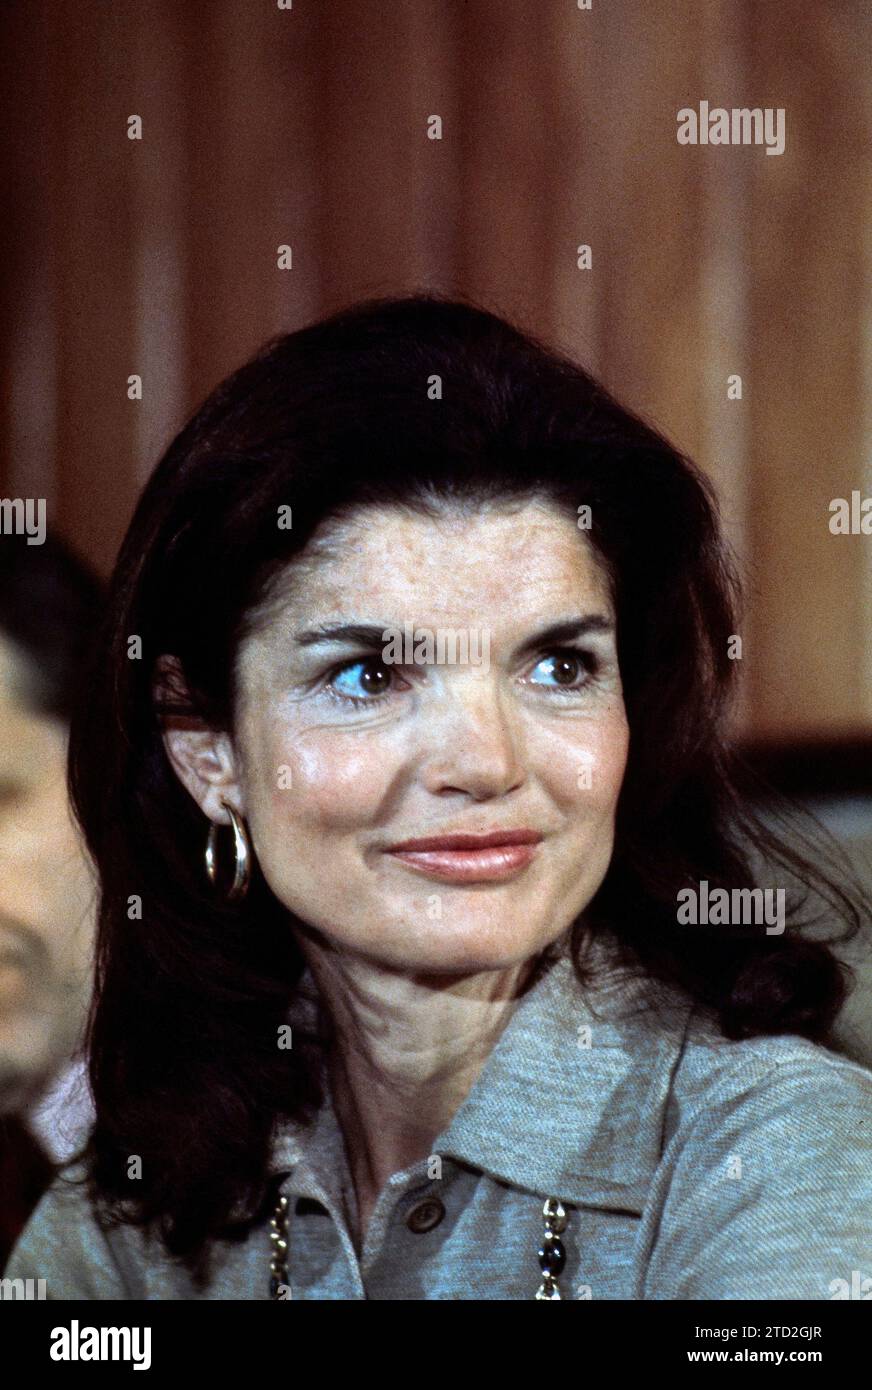 Ehemalige US-First Lady Jacqueline Kennedy Onassis, Porträt Kopf und Schultern, Bernard Gotfryd Photograph Collection, 1978 Stockfoto